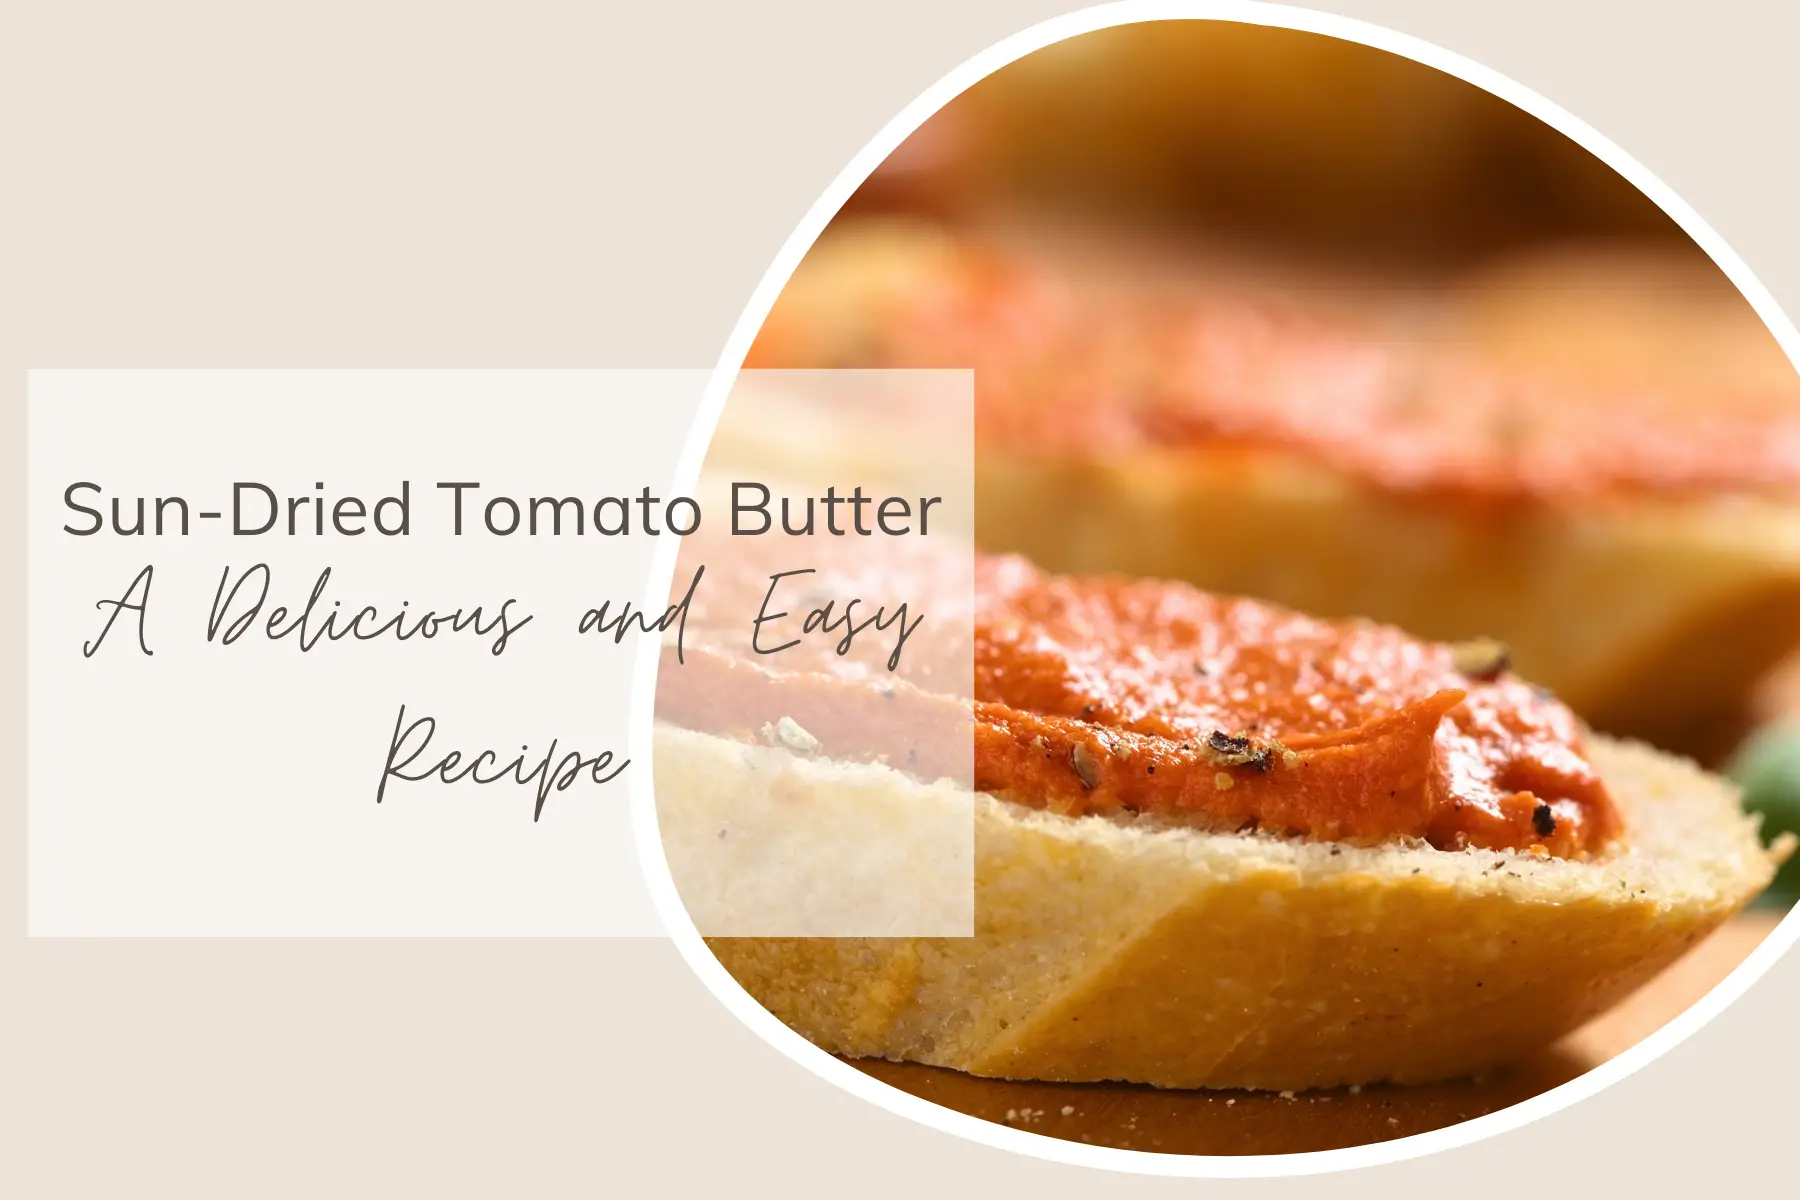 Sun-Dried Tomato Butter: A Delicious and Easy Recipe